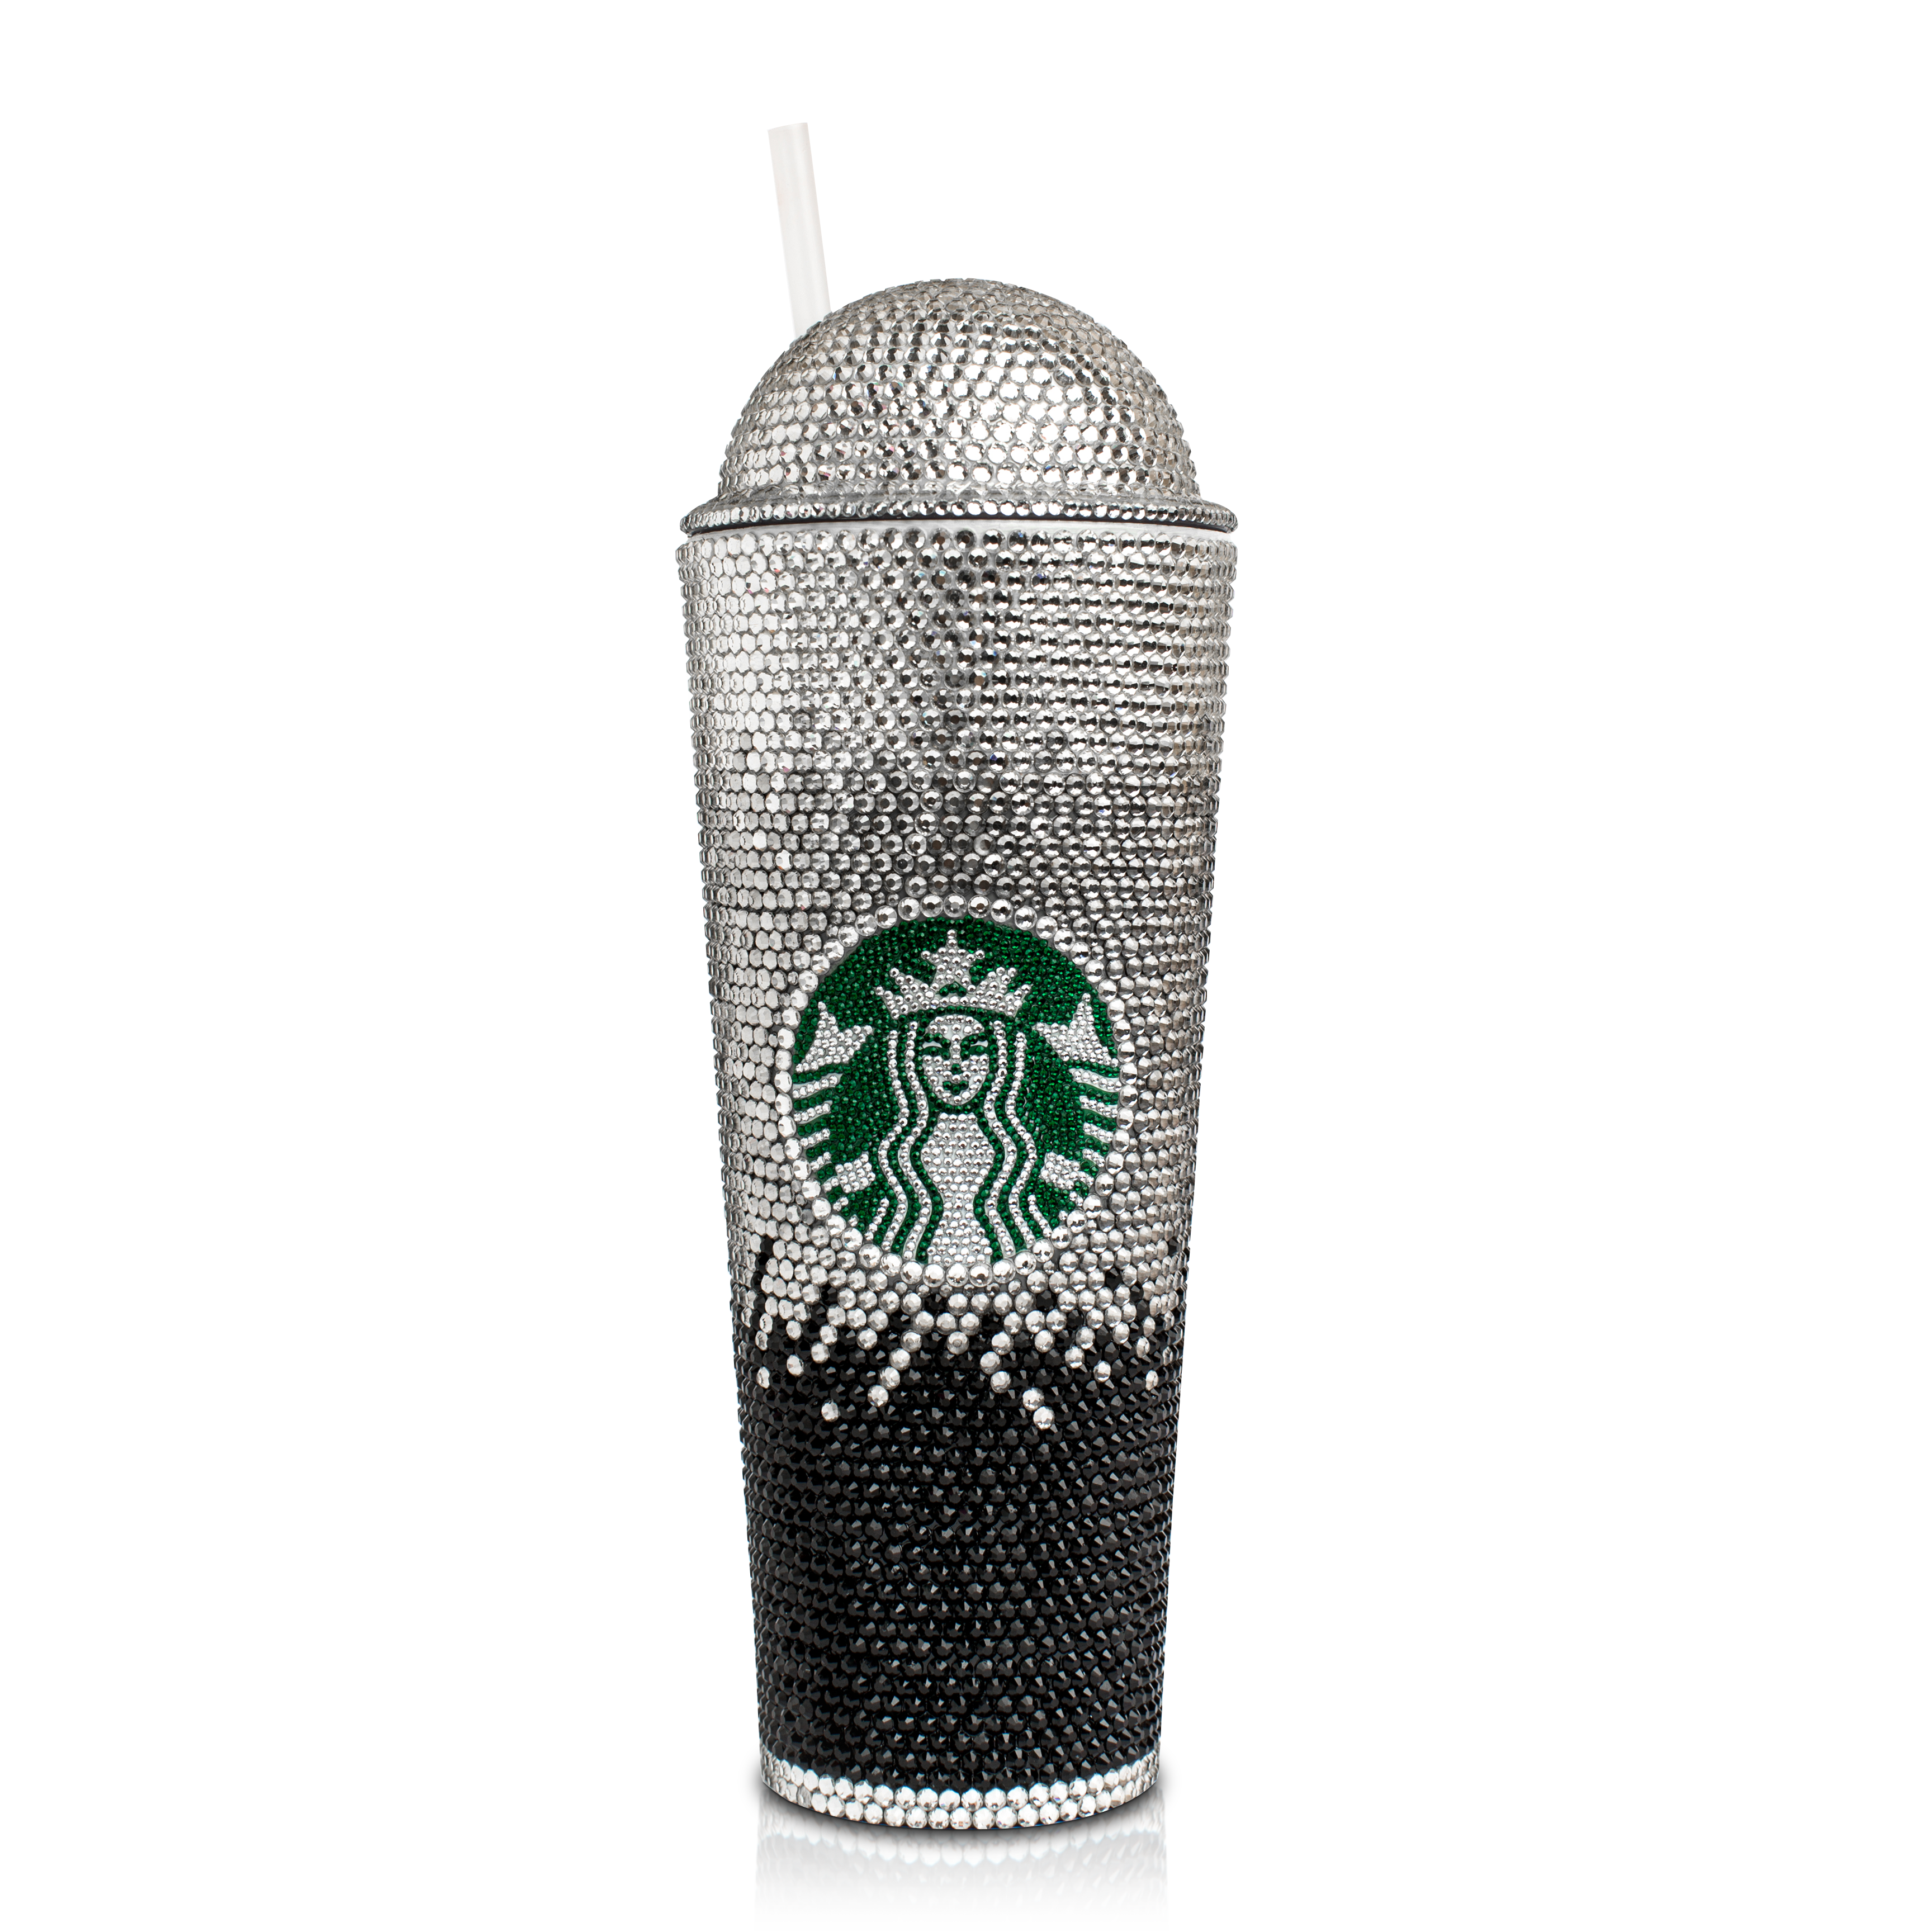 JLO Starbucks Cup